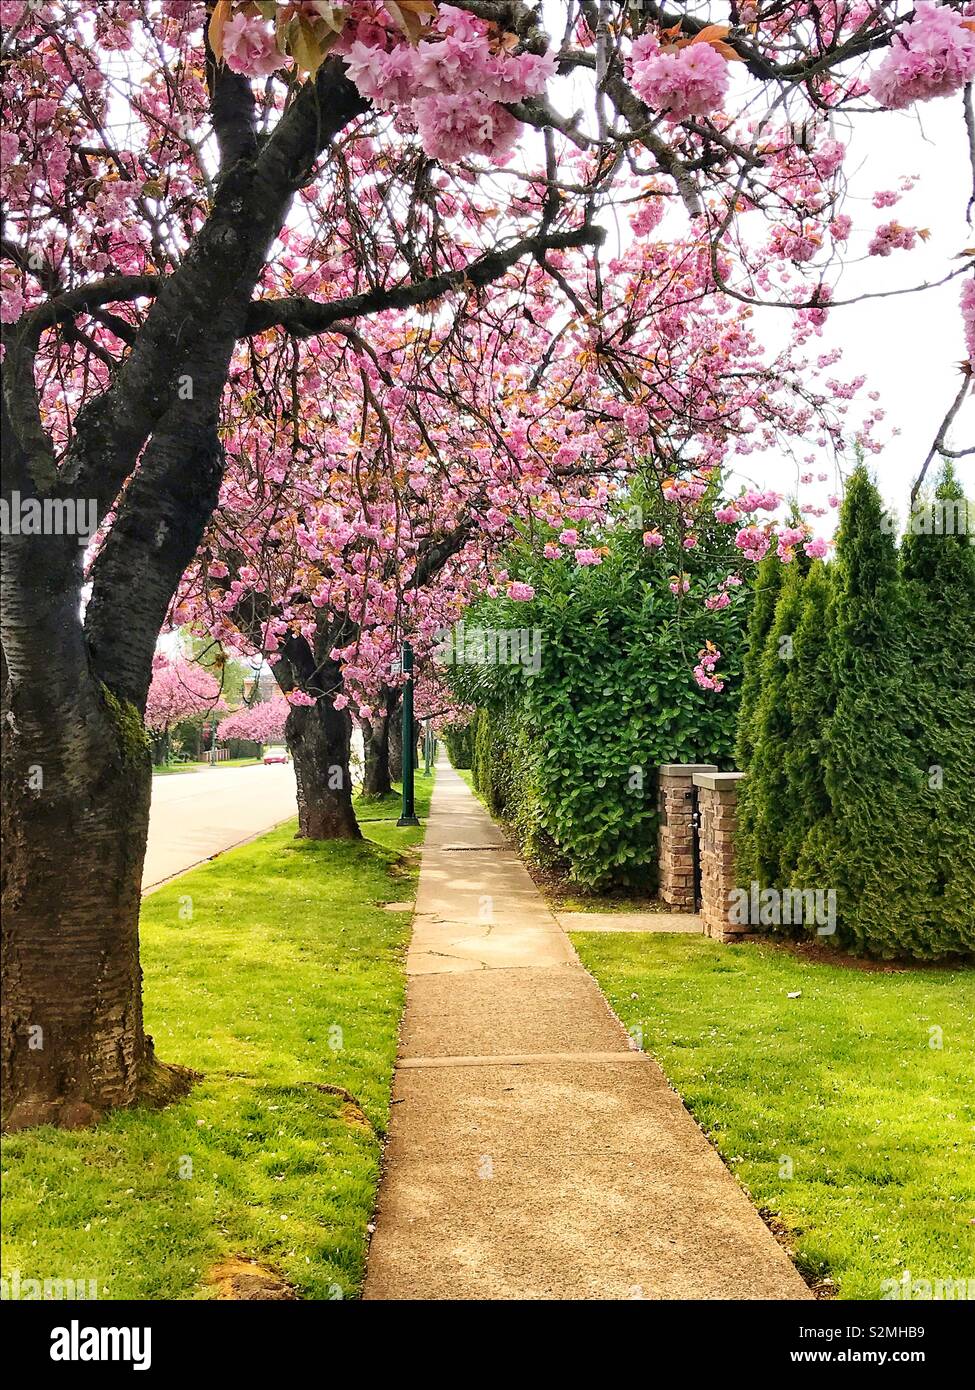 Gehweg gesäumt von Bäumen mit rosa Kirschblüten in Vancouver, Kanada Stockfoto